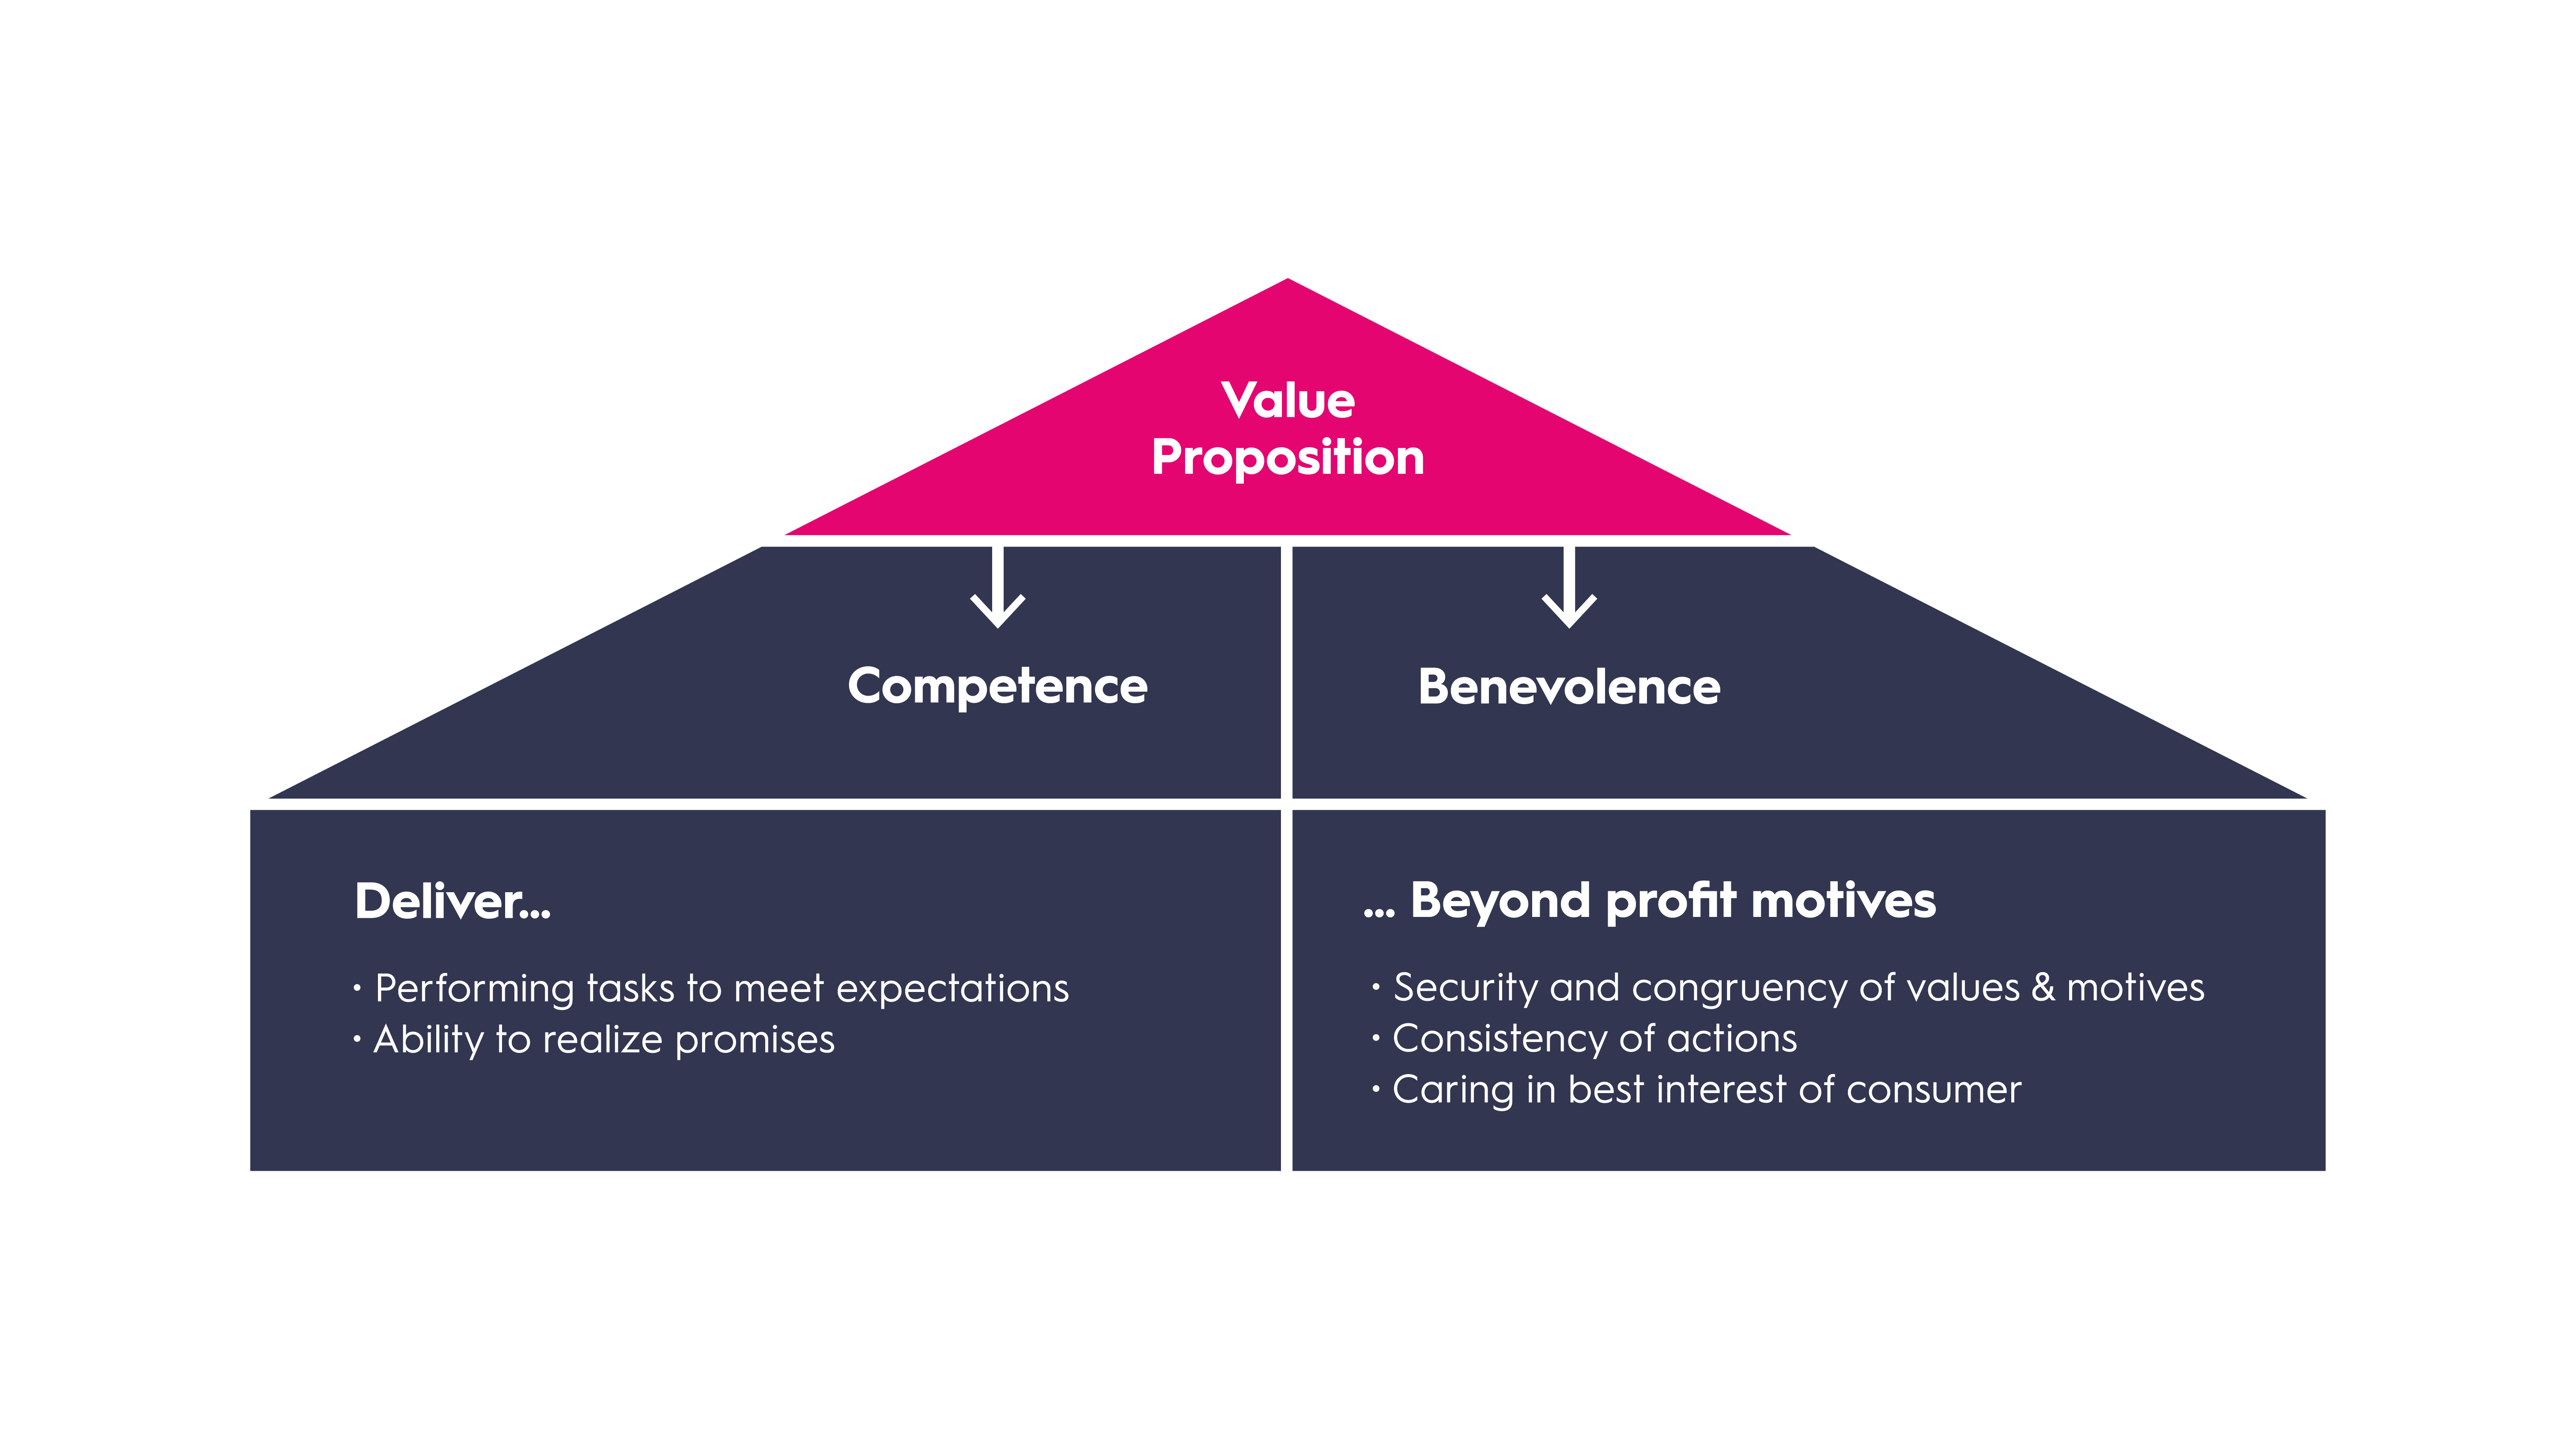 Figure 1. Brand trust components